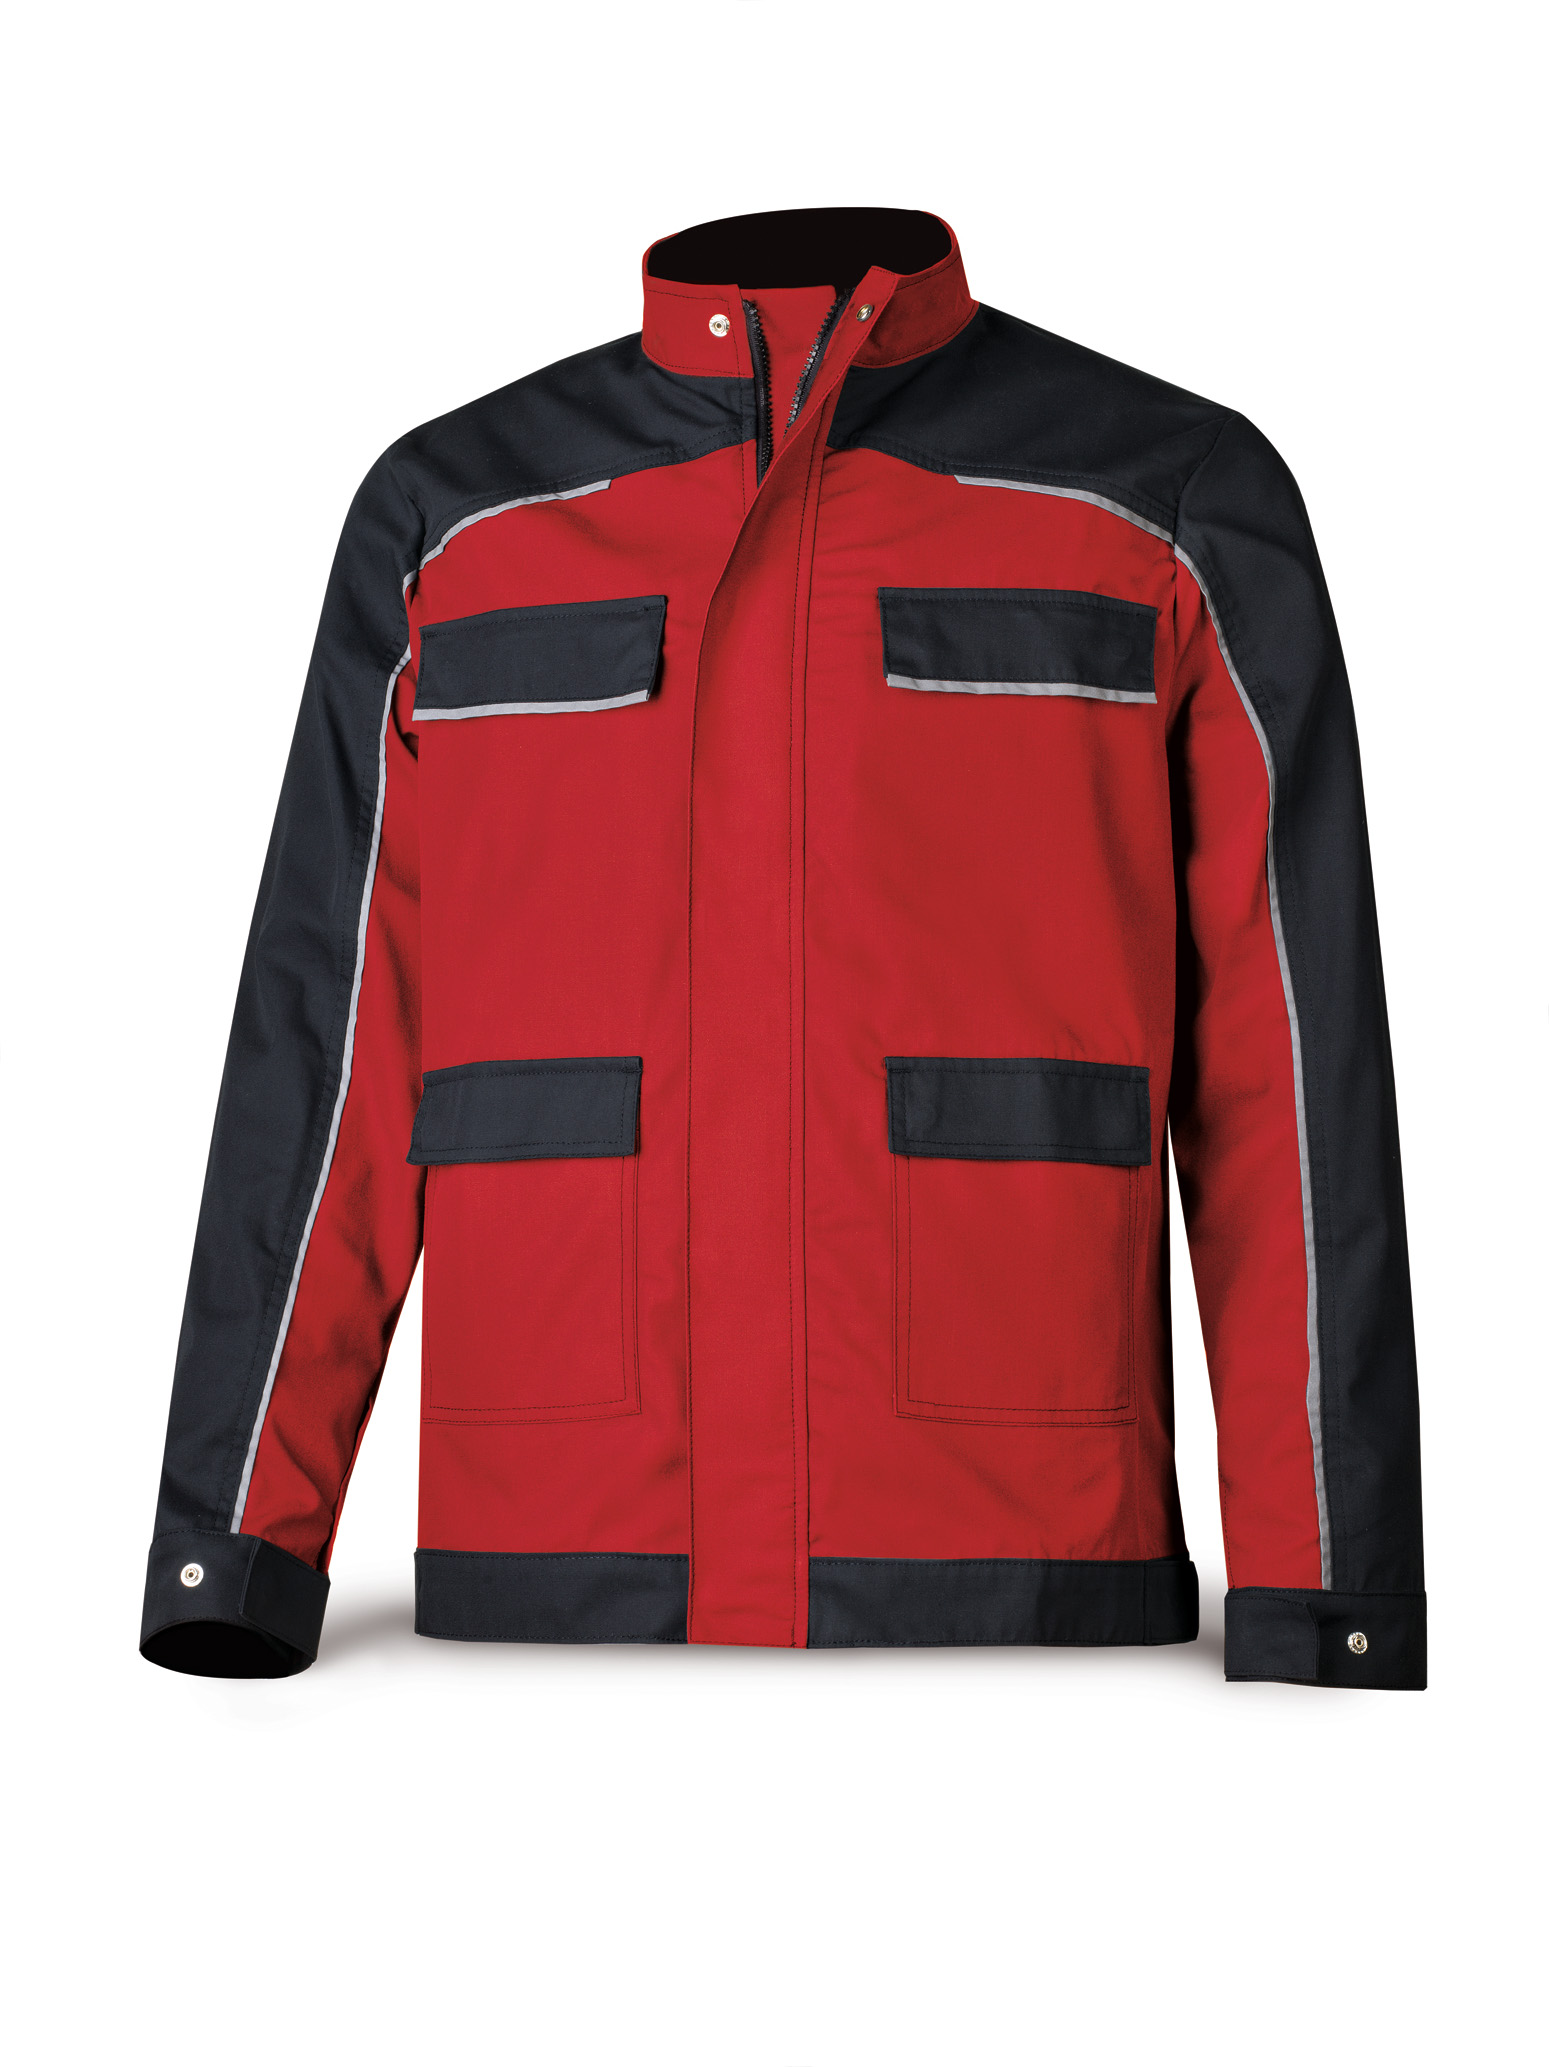 588-CRN Workwear Pro Series 245 gr. Canvas tergal jacket. Red/Black.